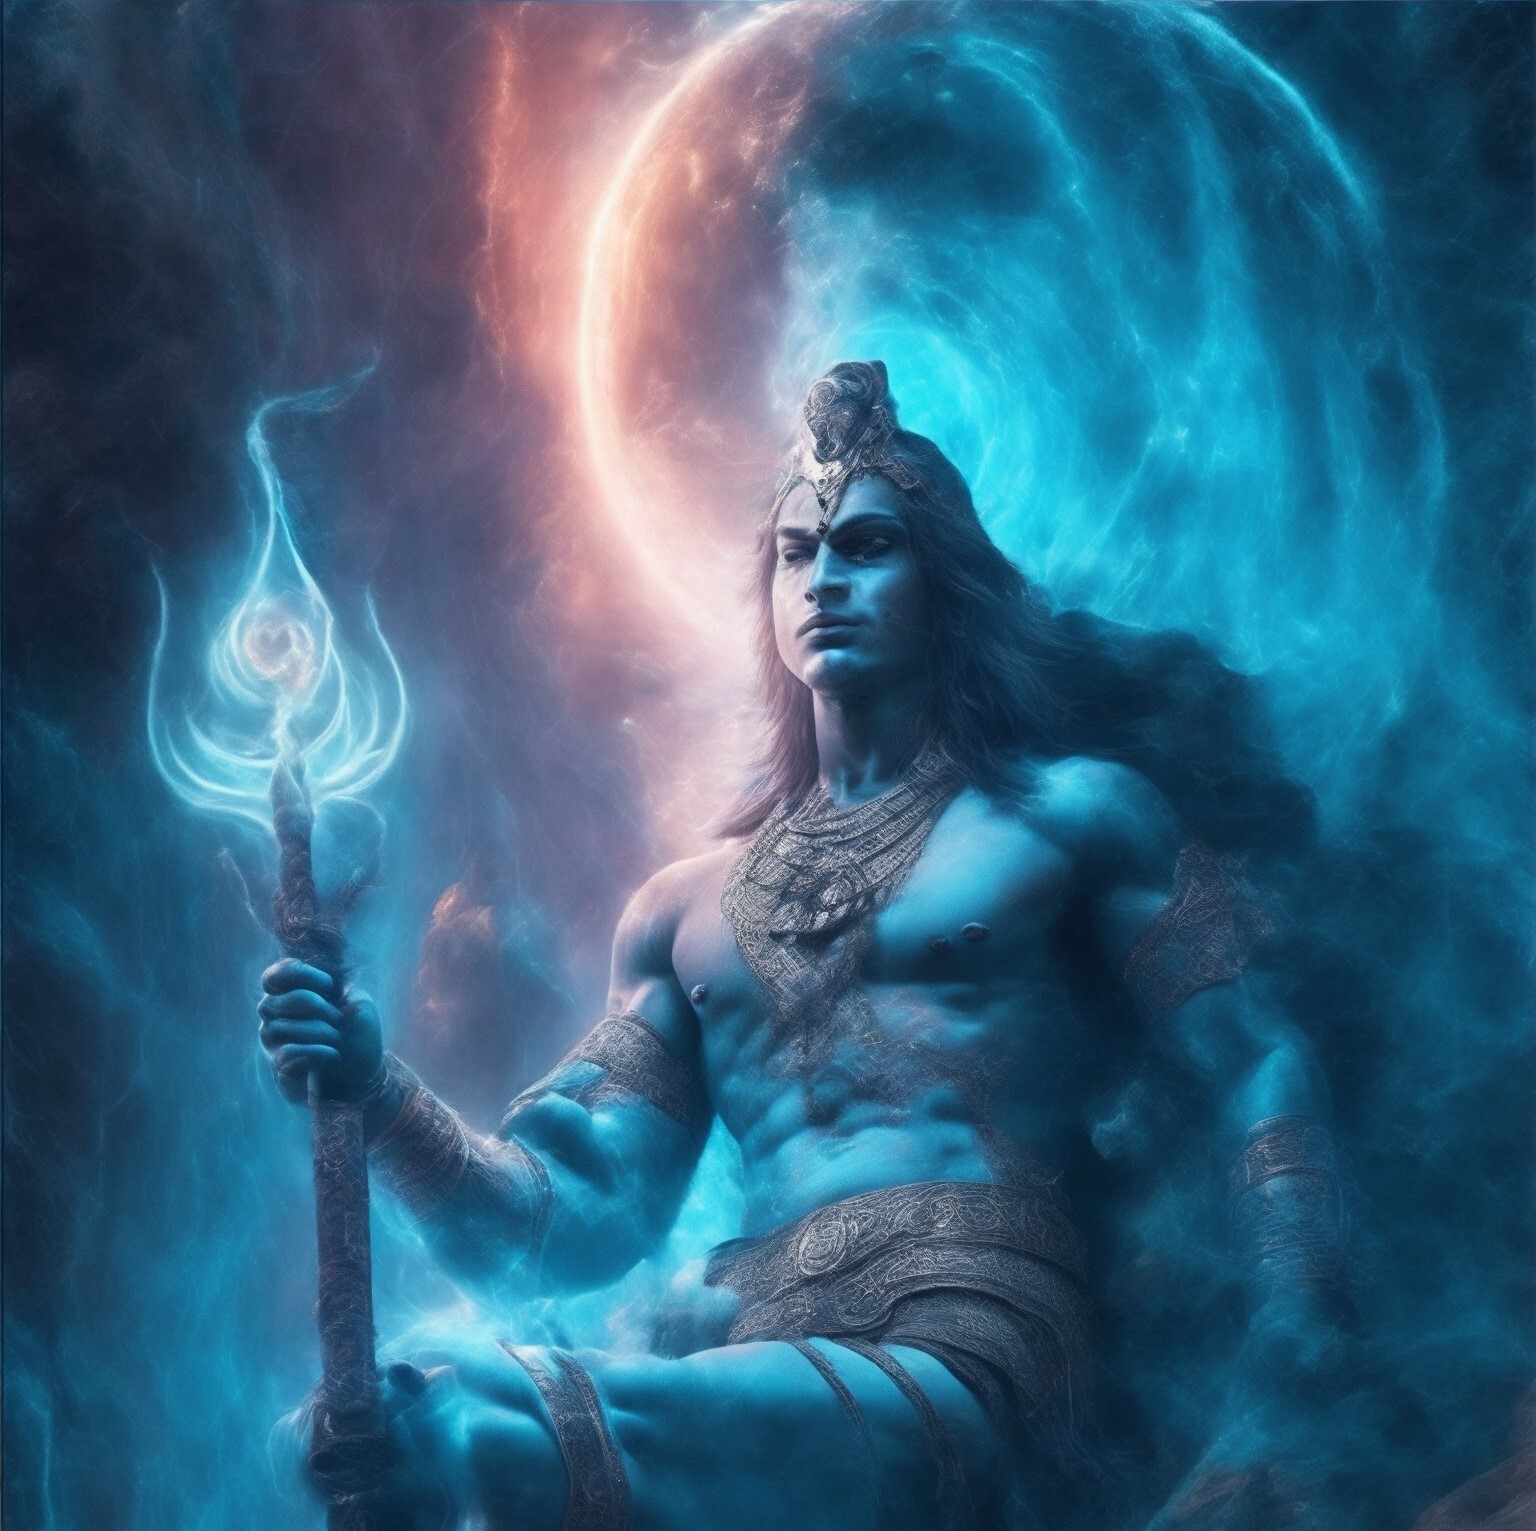 ArtStation - Lord Shiva in Cosmic Energy